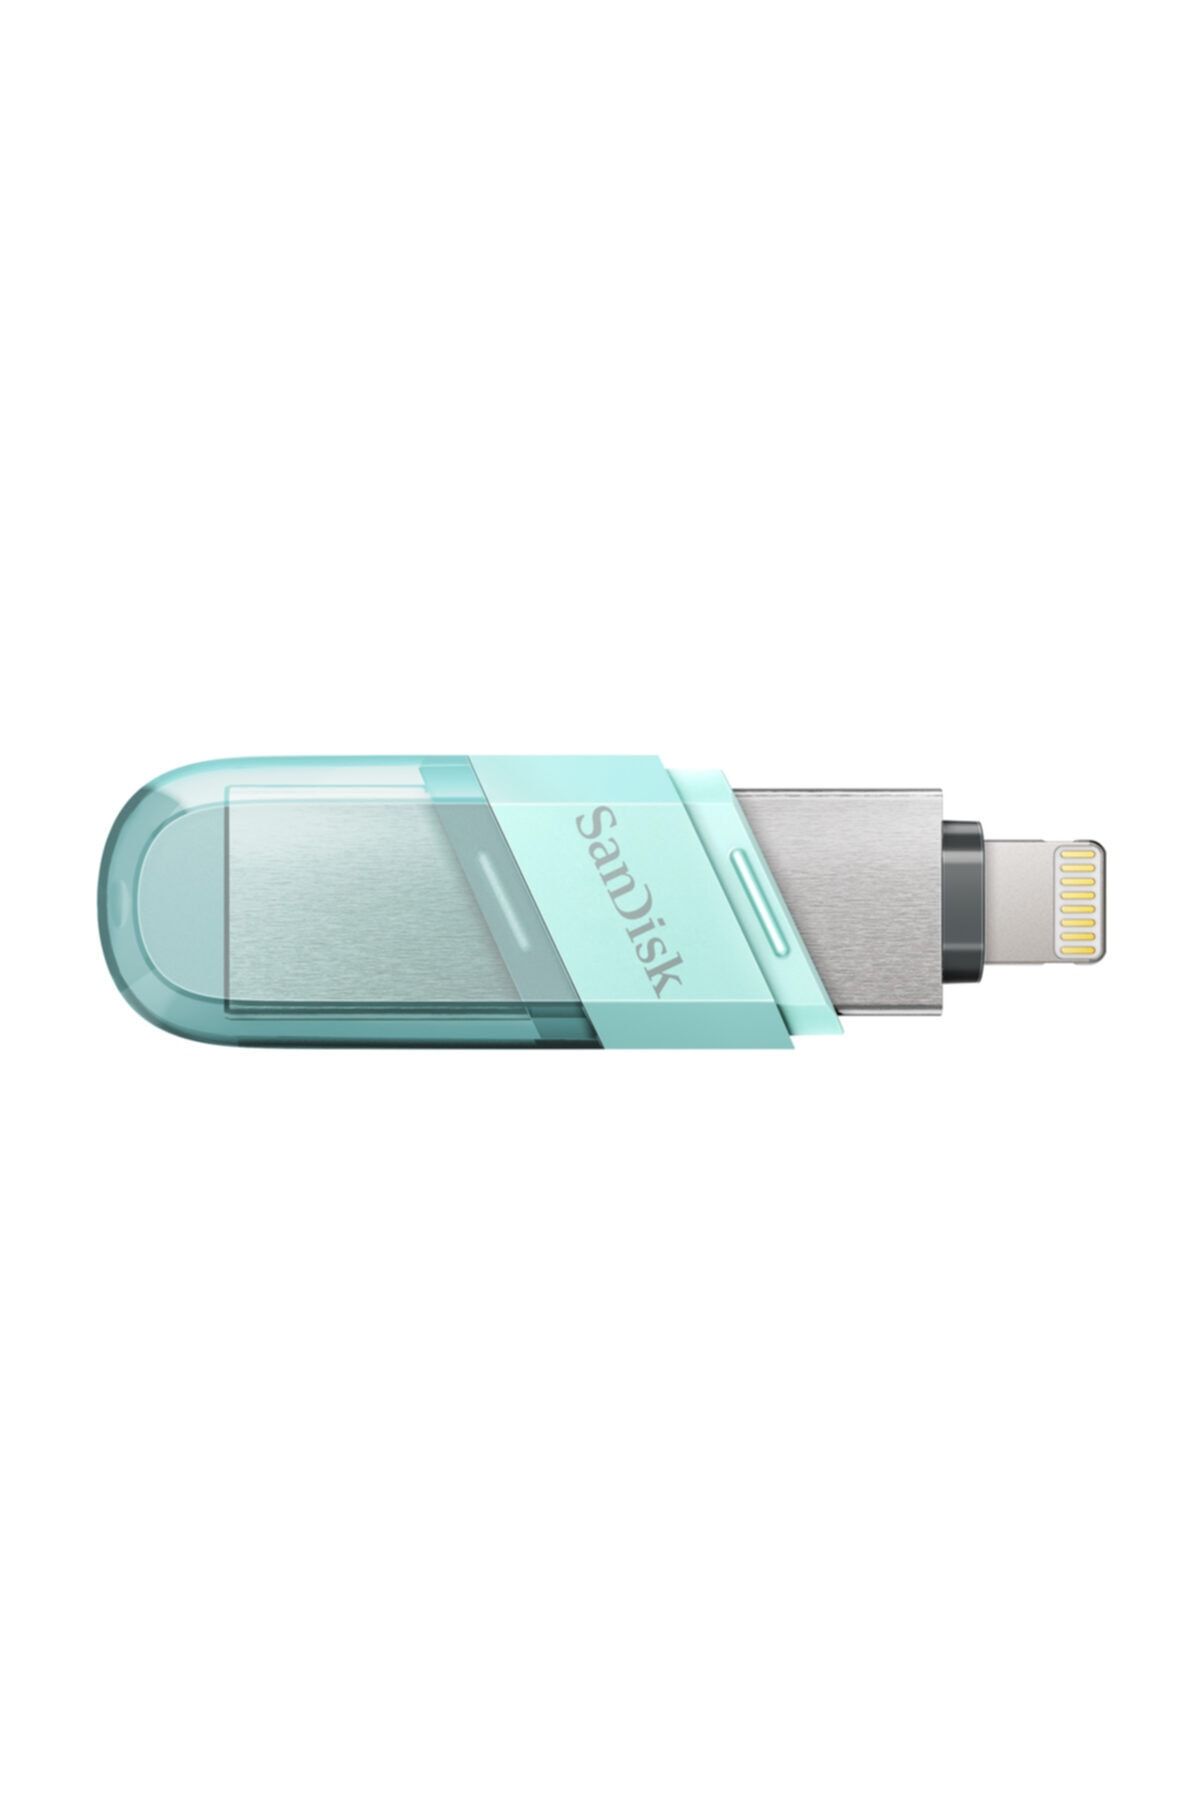 Sandisk iXpand 128GB Flash Drive Flip IOS USB 3.1